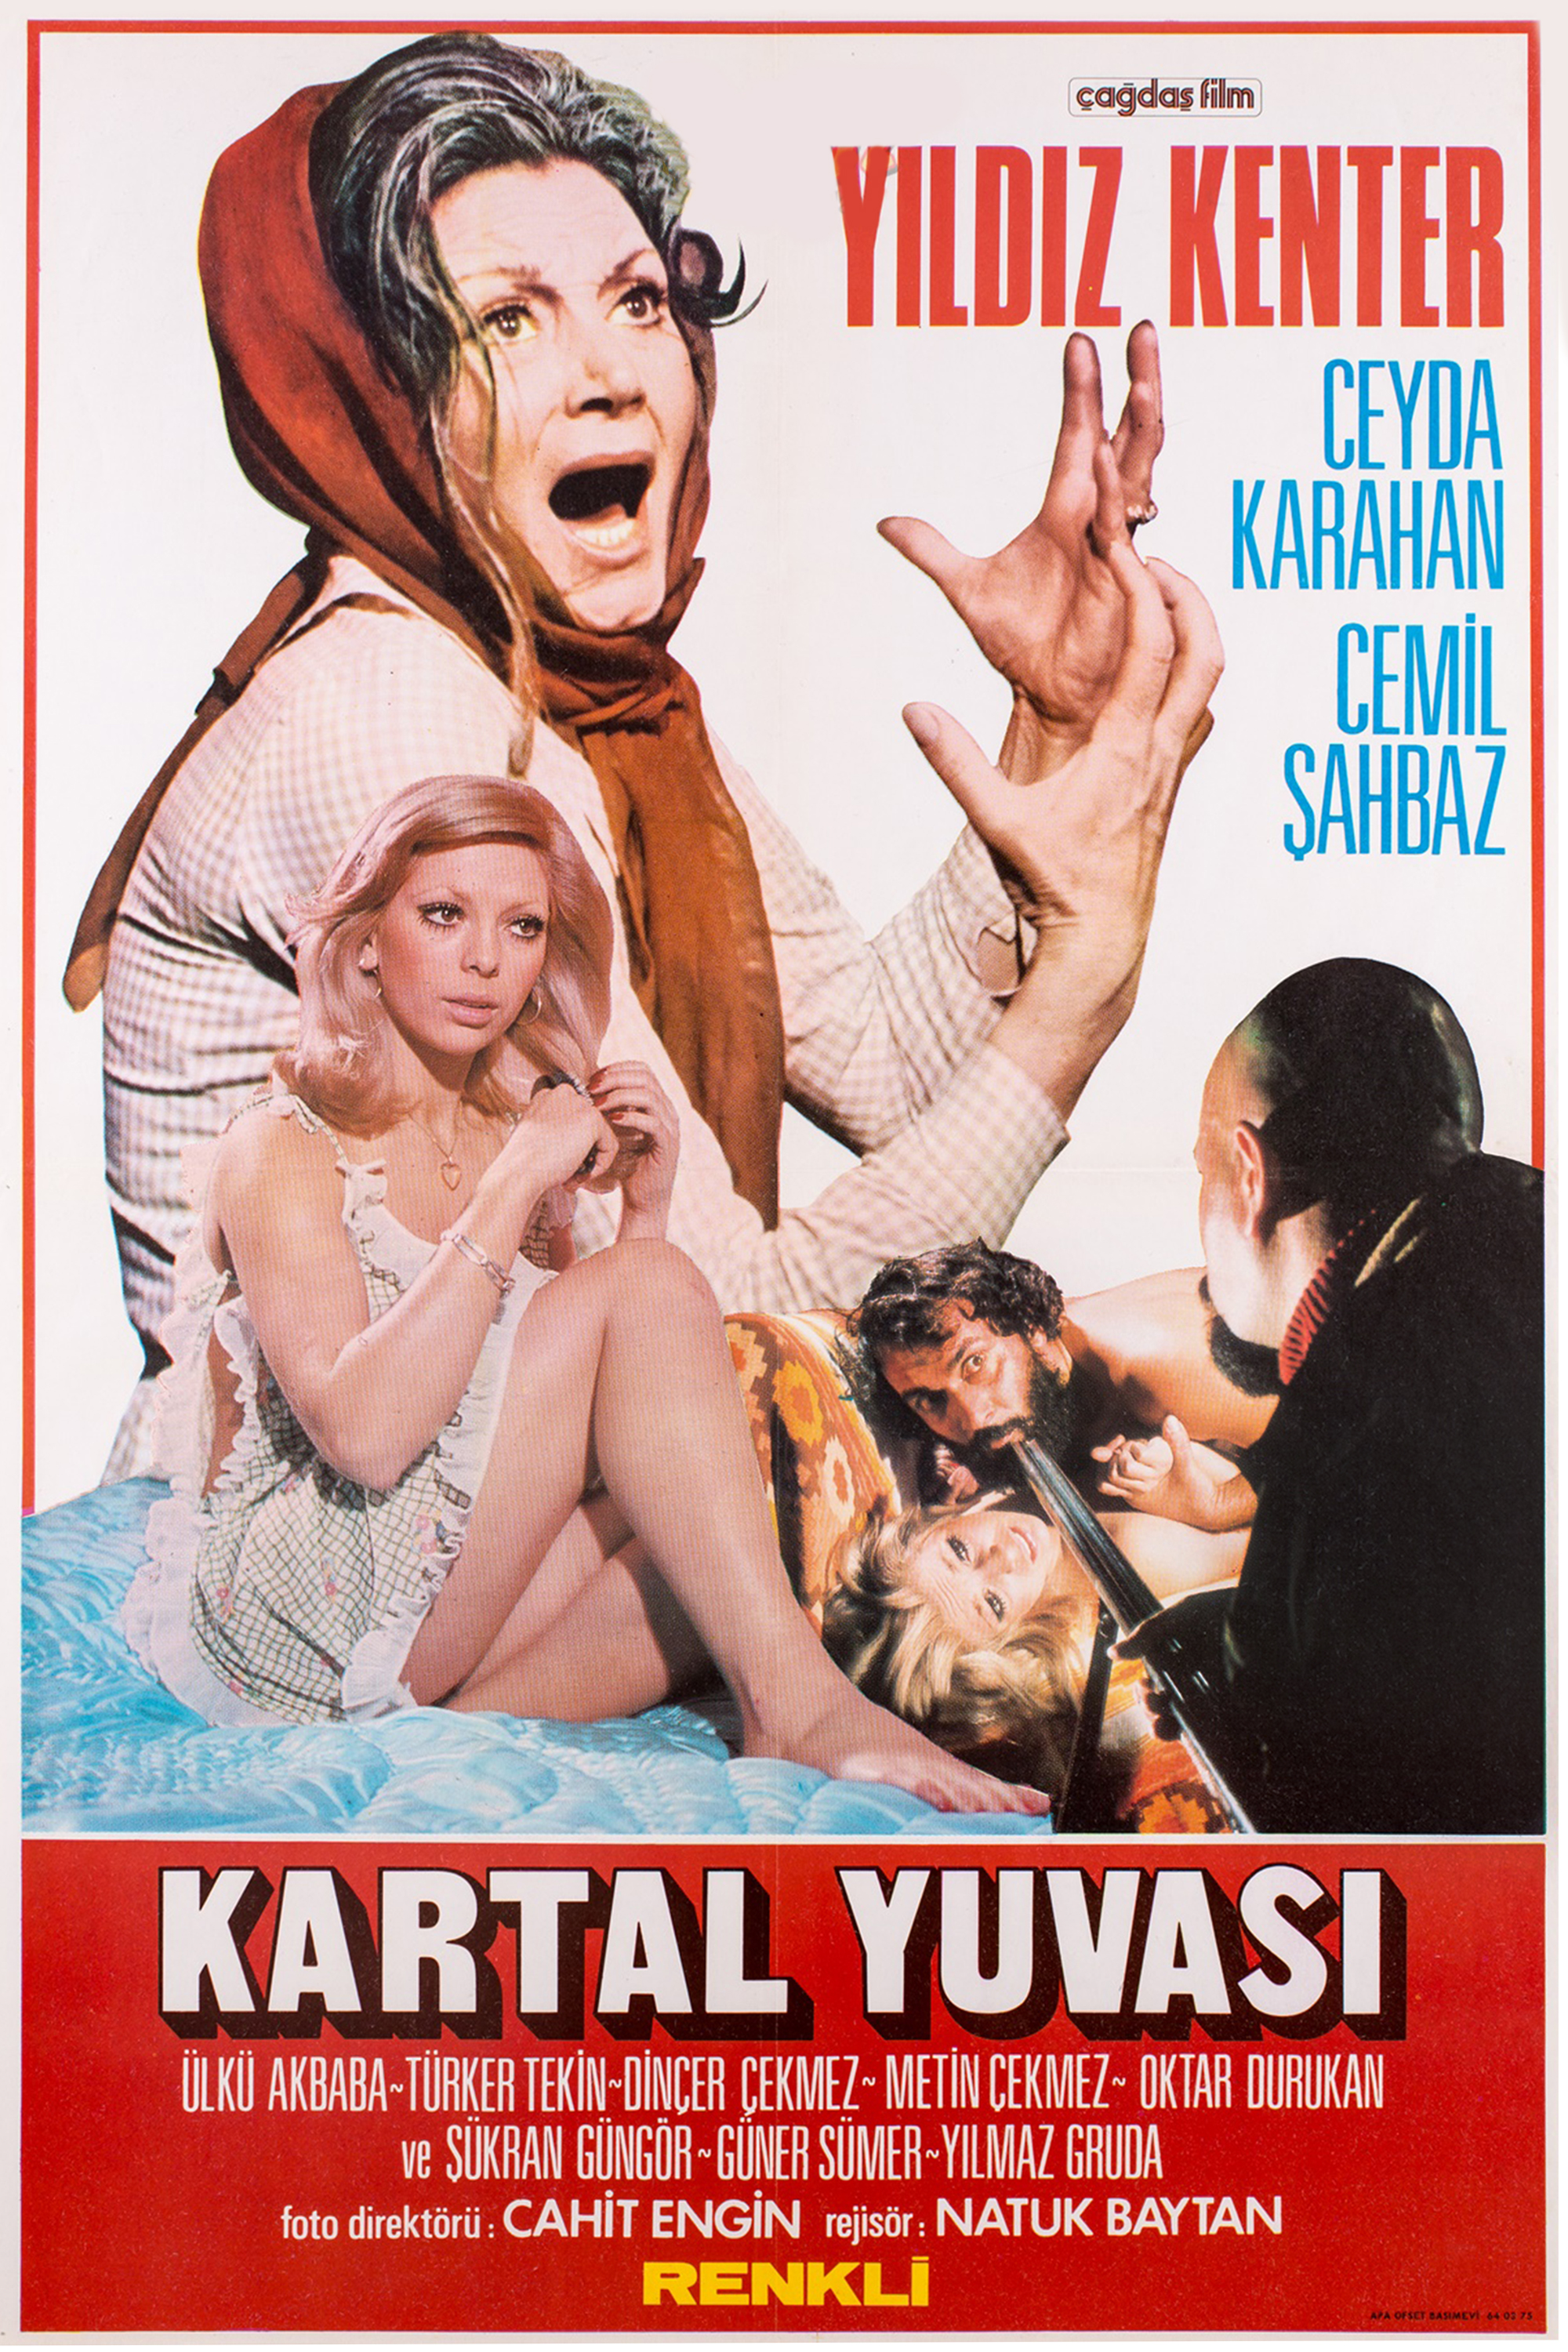 Kartal yuvasi (1974) Screenshot 2